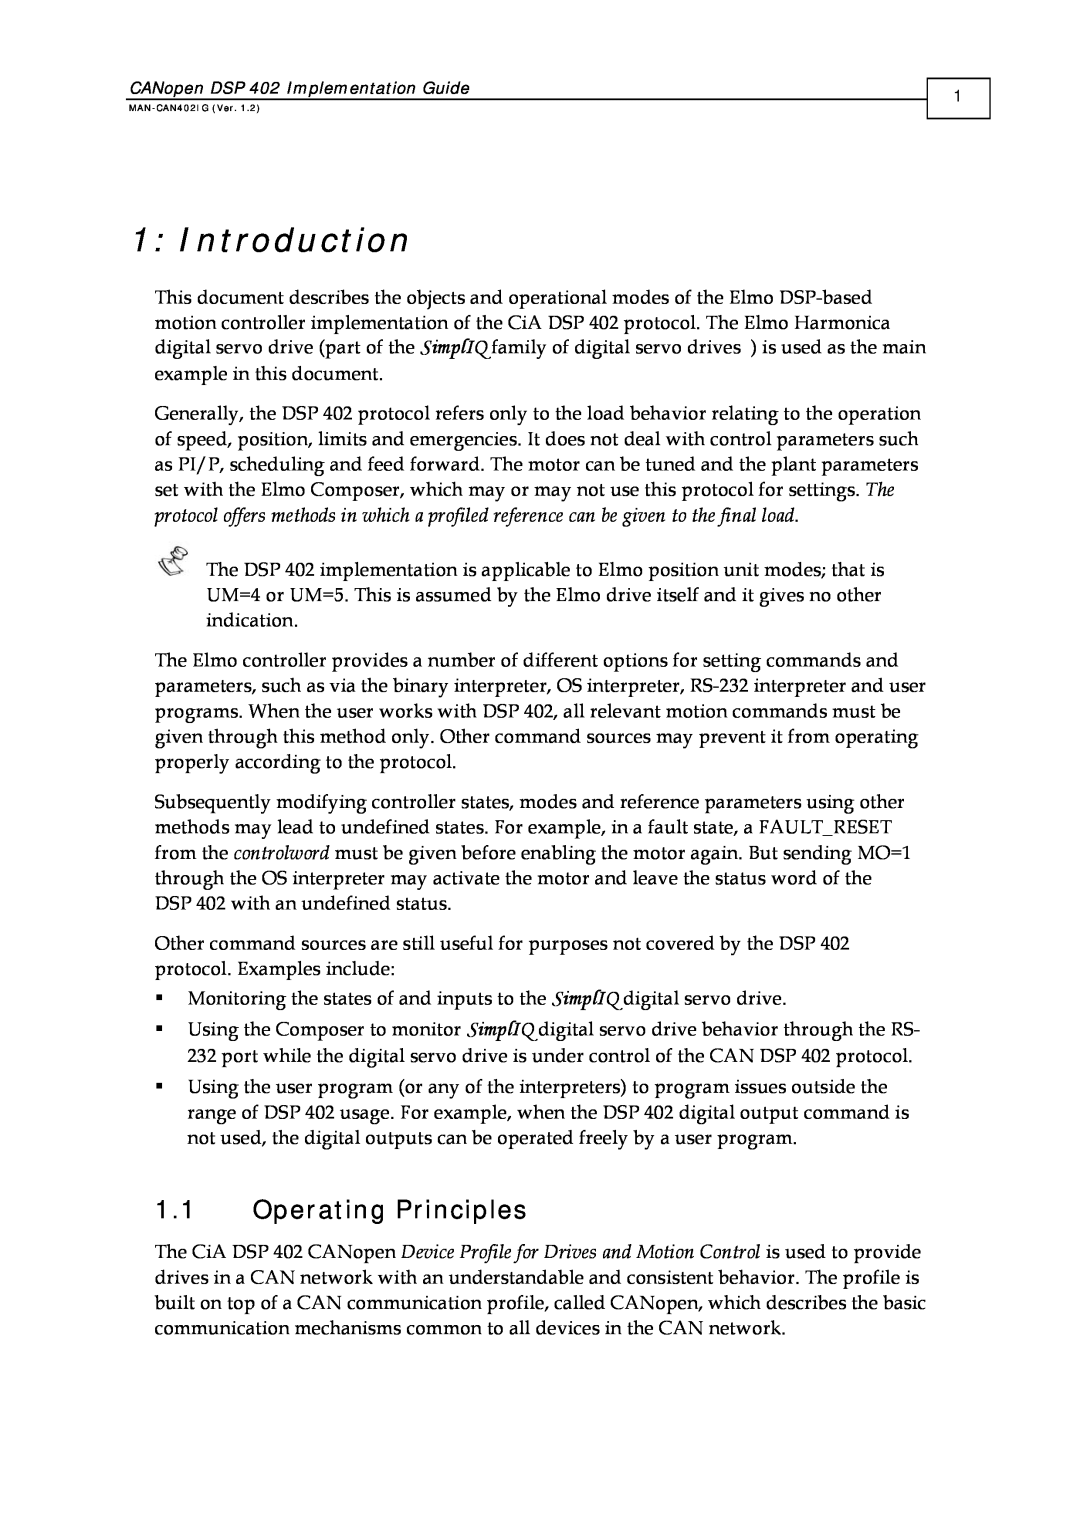 Elmo DSP 402 manual Introduction, 1.1Operating Principles 